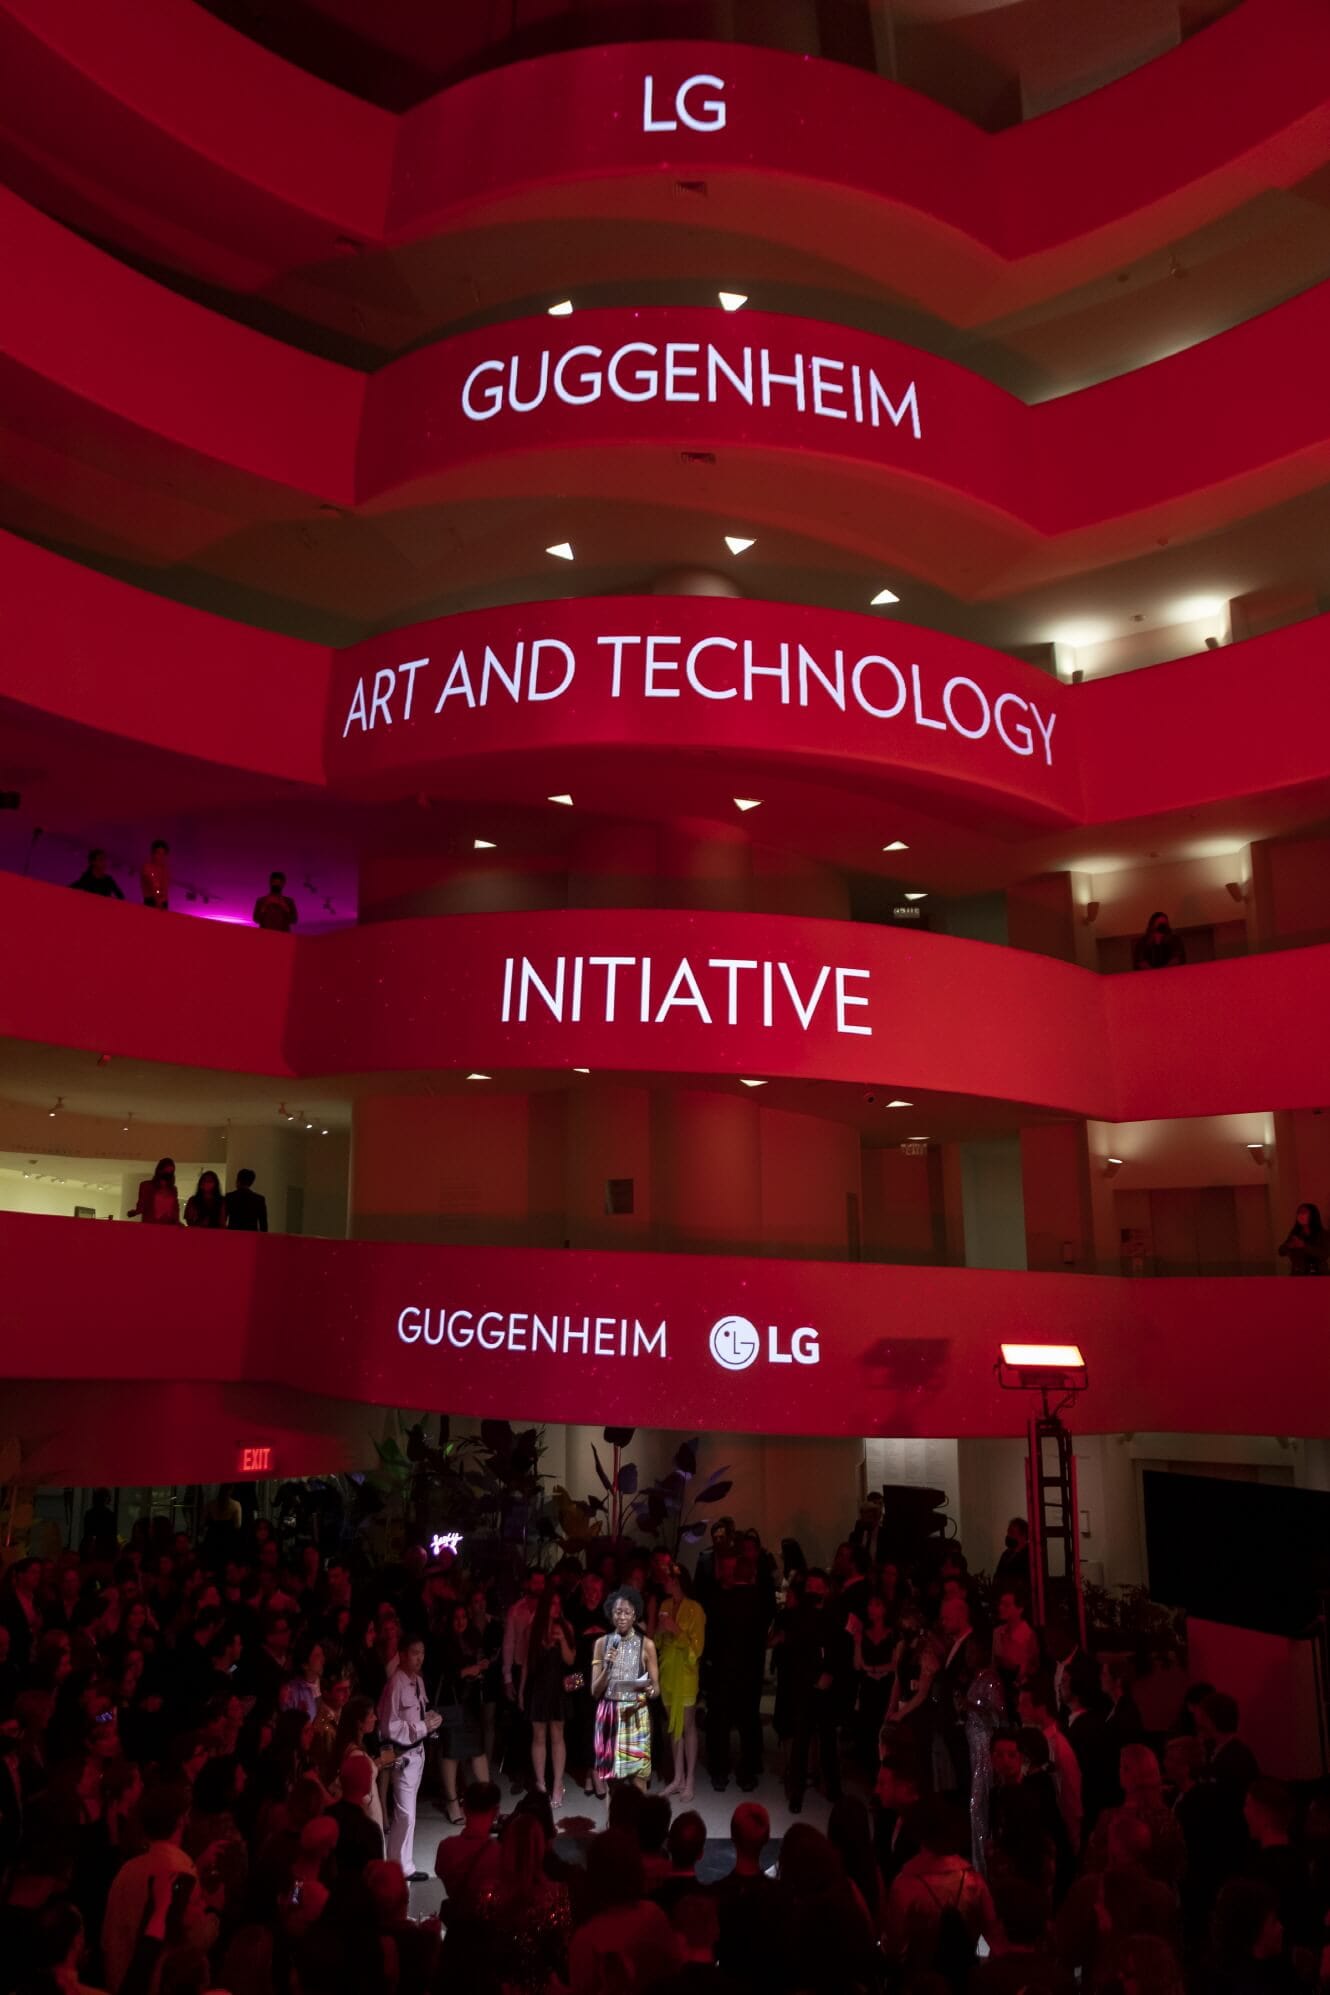 LG partners with Guggenheim Museum to promote brand, support artists. LG와 구겐하임, 현대 미술과 기술의 만남, 발족 행사 전경